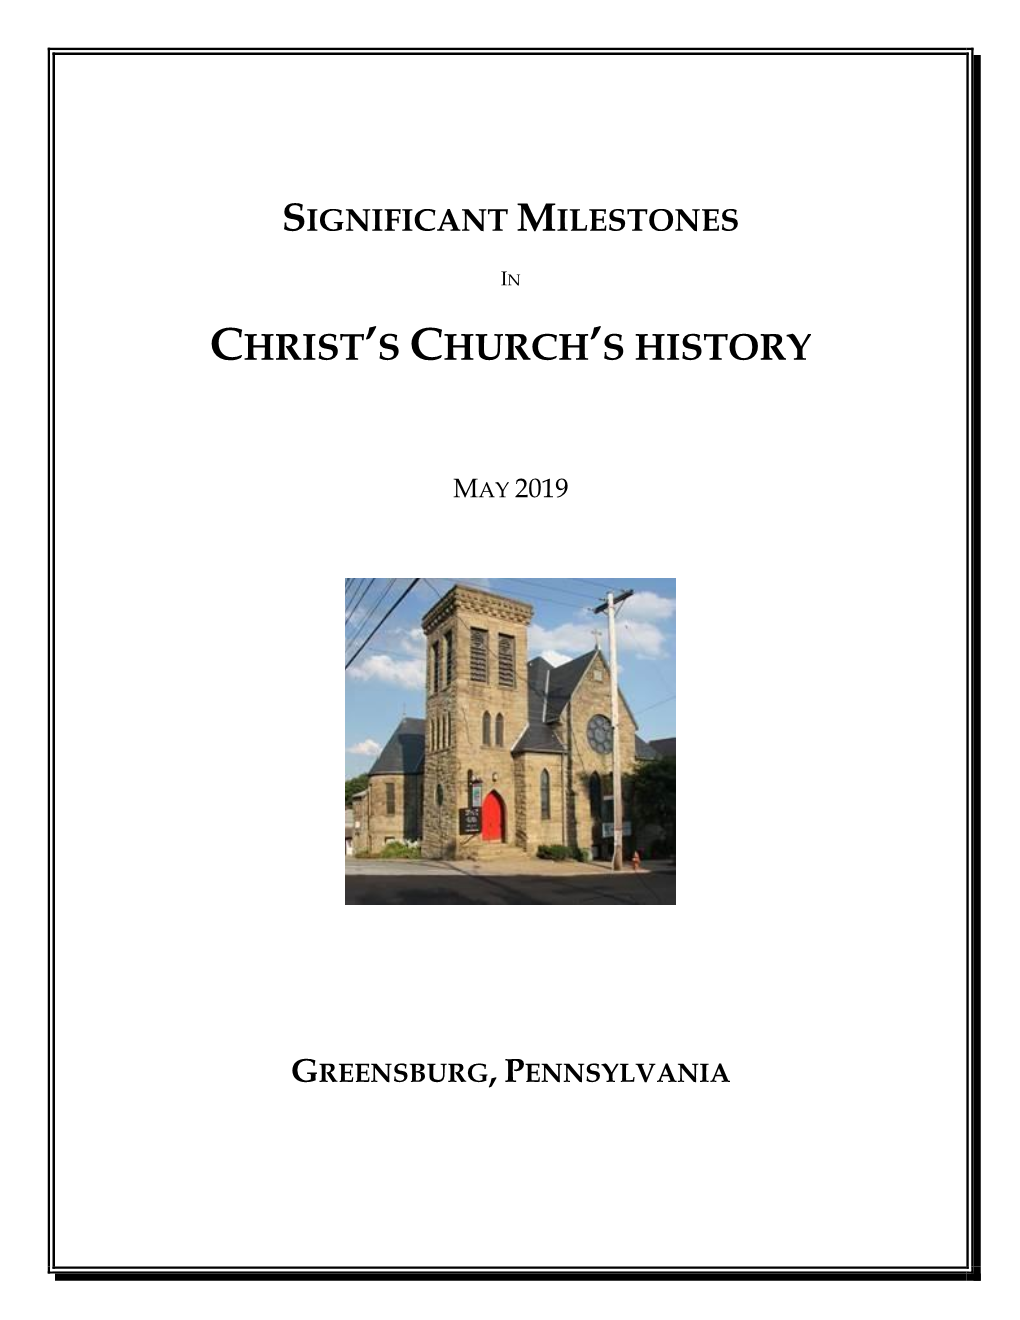 Christ's Church's History